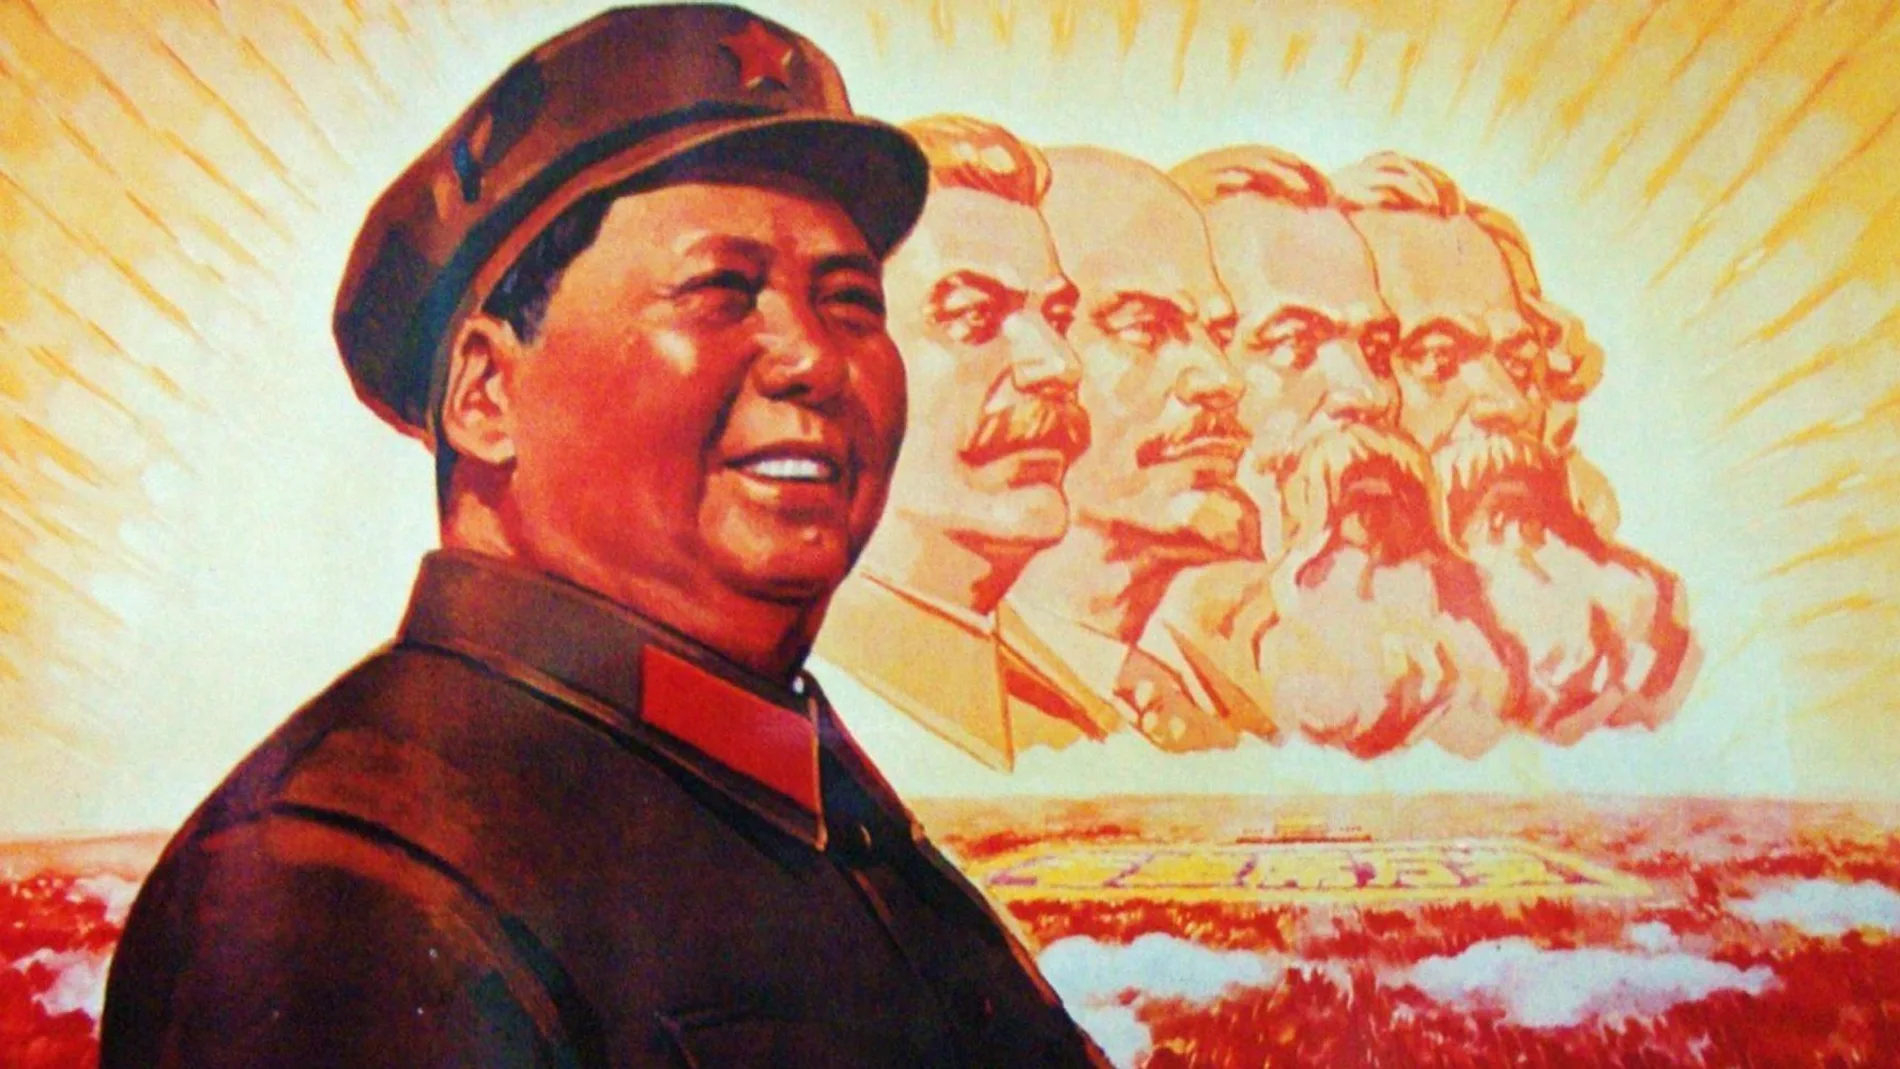 El líder comunista chino Mao Zedong